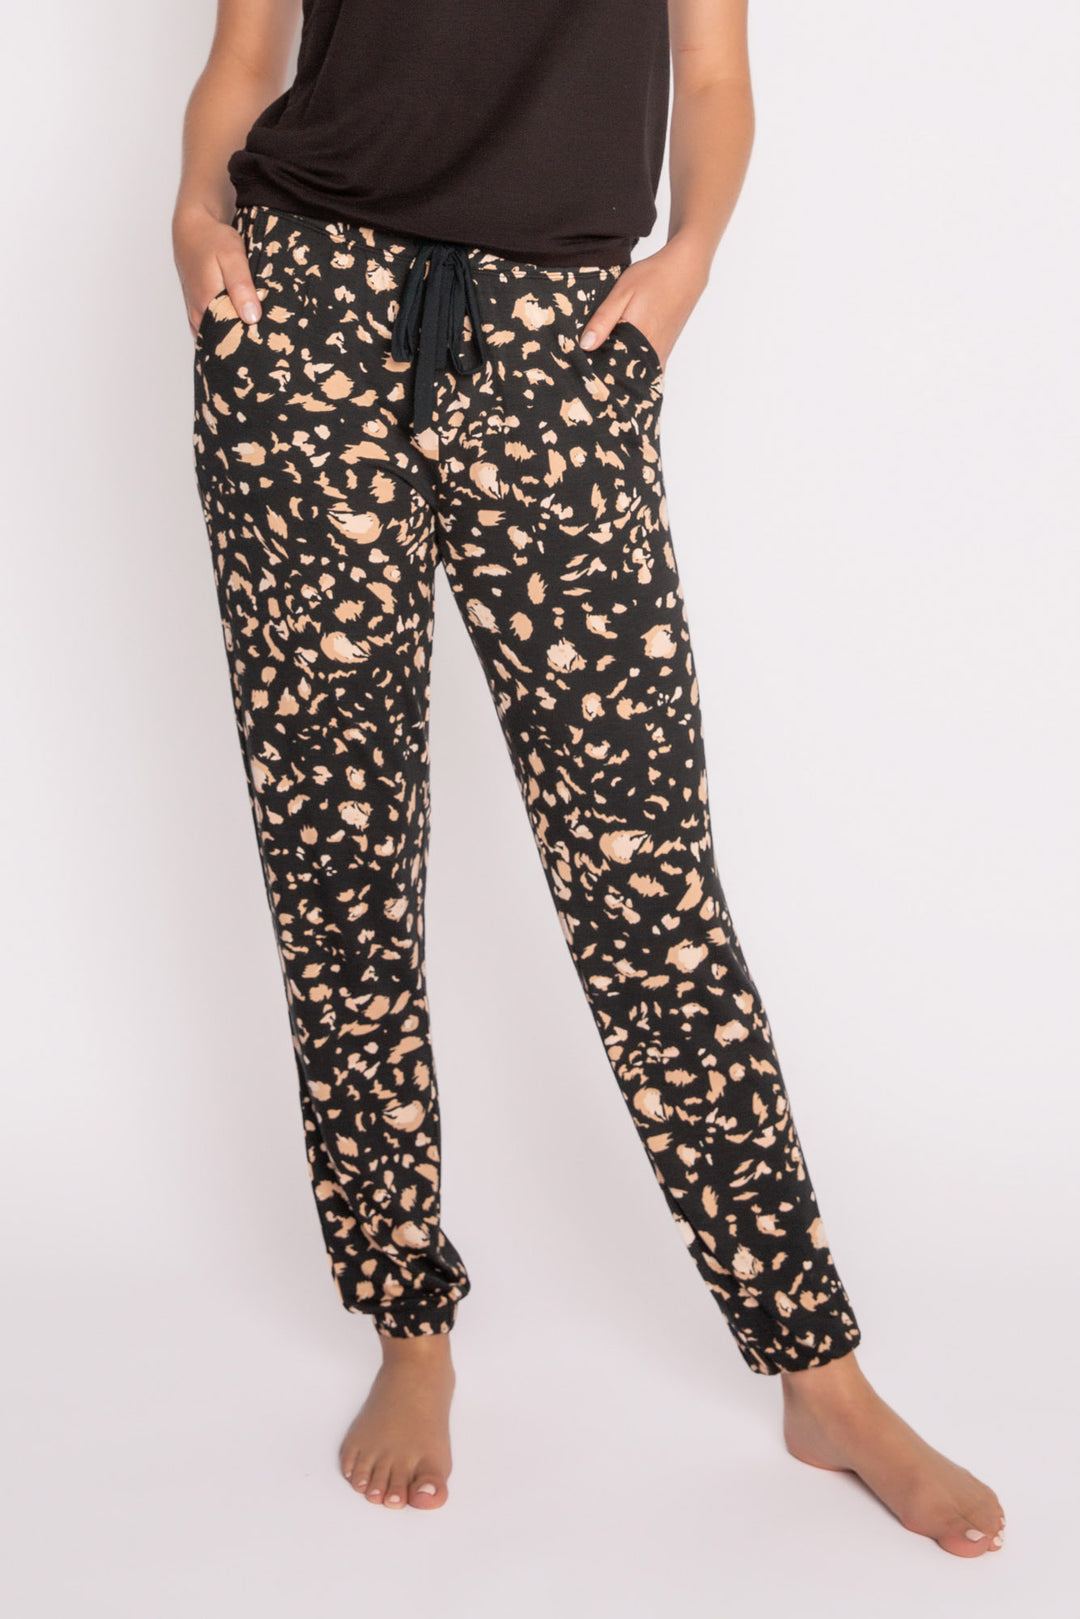 Luxe cheetah-print pajama jogger pant n black-camel on modal jersey. Tie waist. (7231864340580)